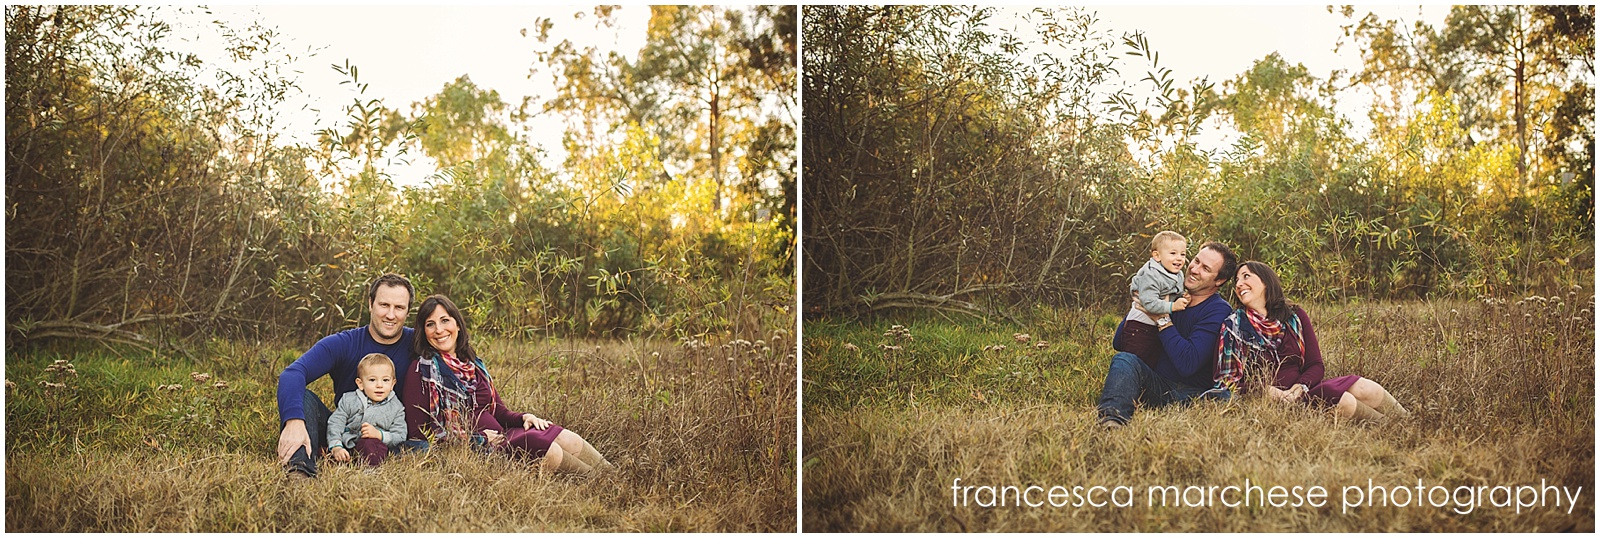 Orange County Maternity Photographer - Francesca Marchese Photography